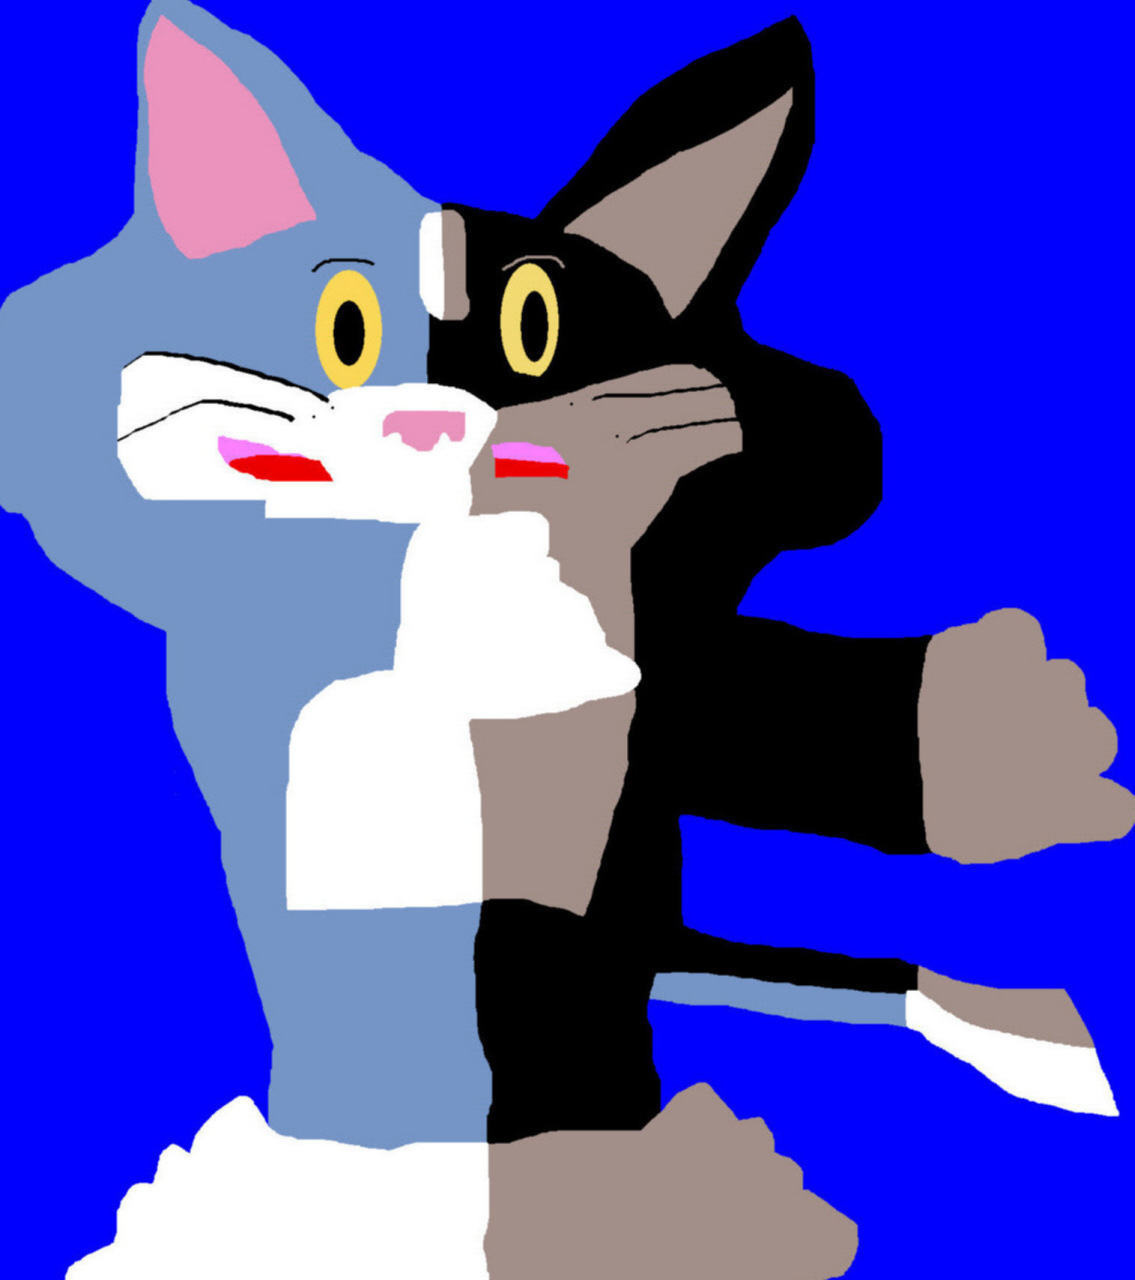 Tom/Smokey From Black Cat Episode MS Paint by Falconlobo